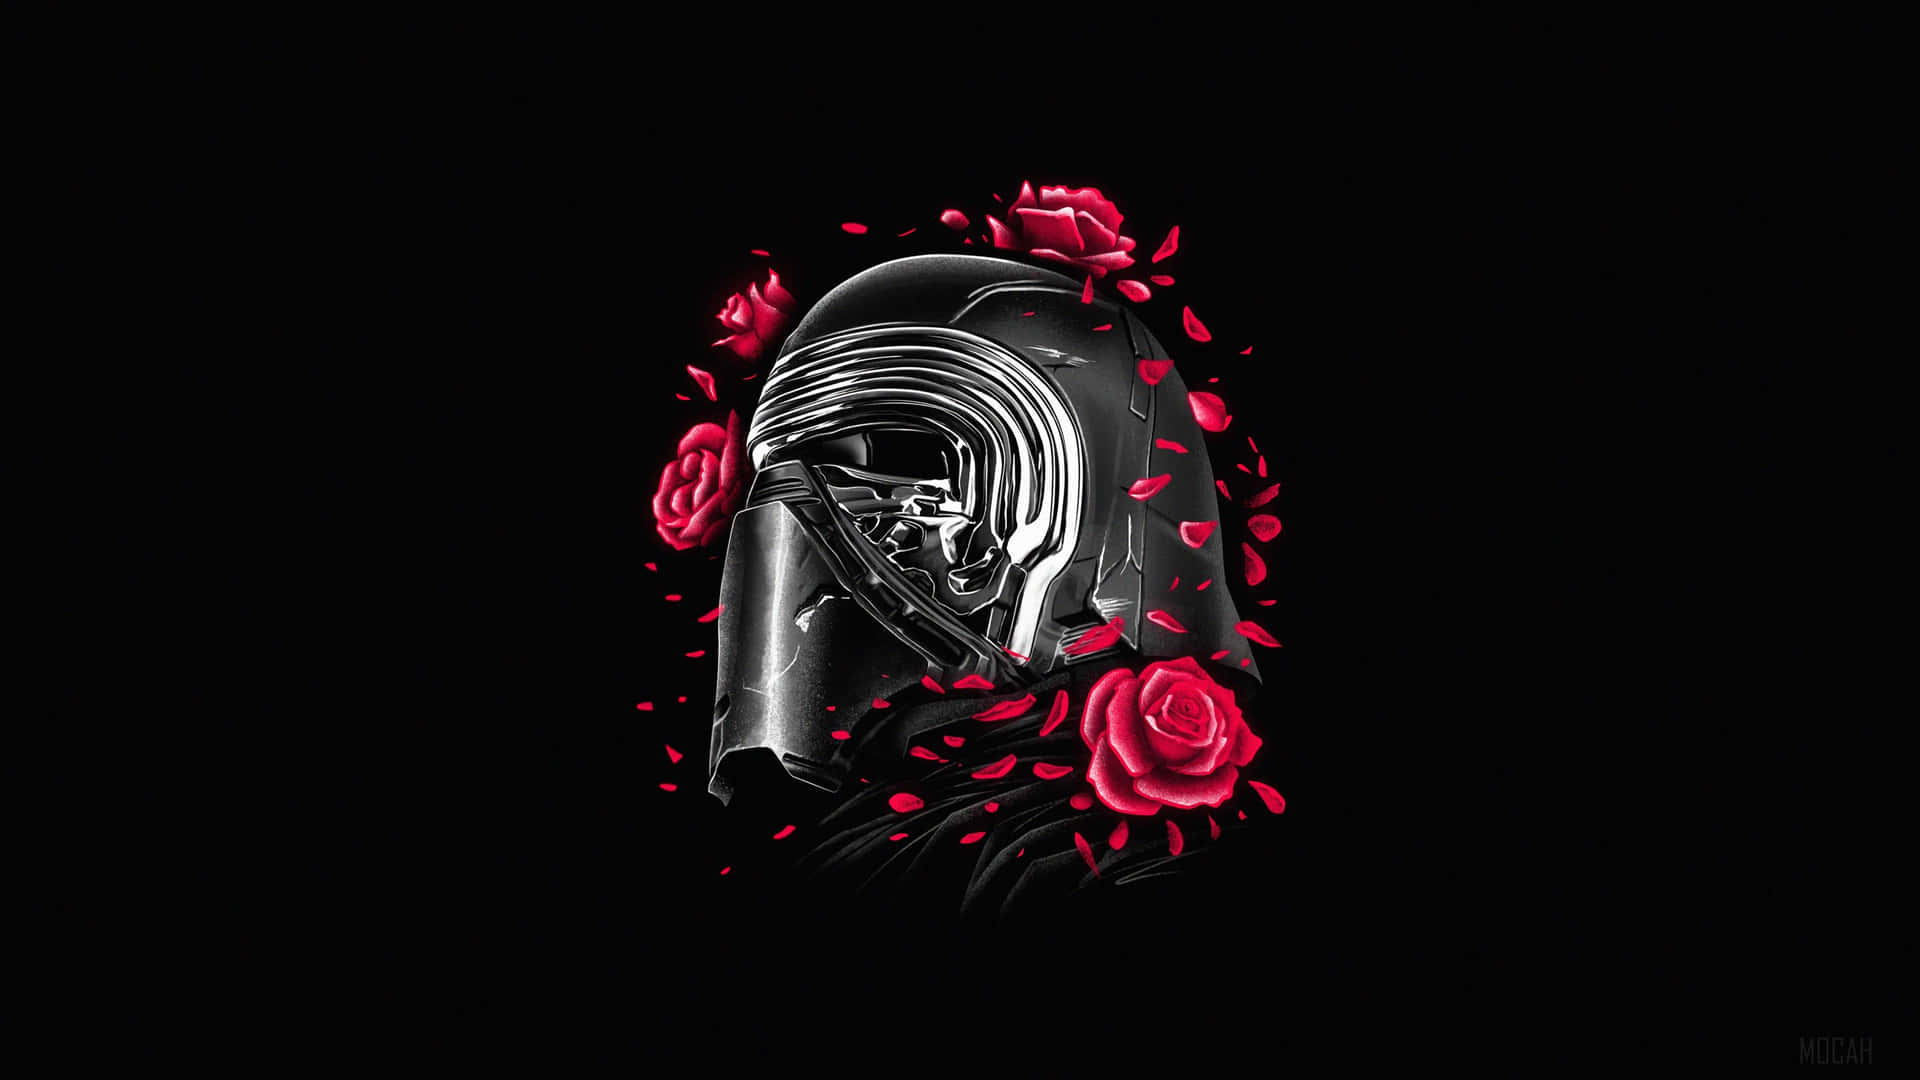 Darth Vader's heir, Kylo Ren Wallpaper